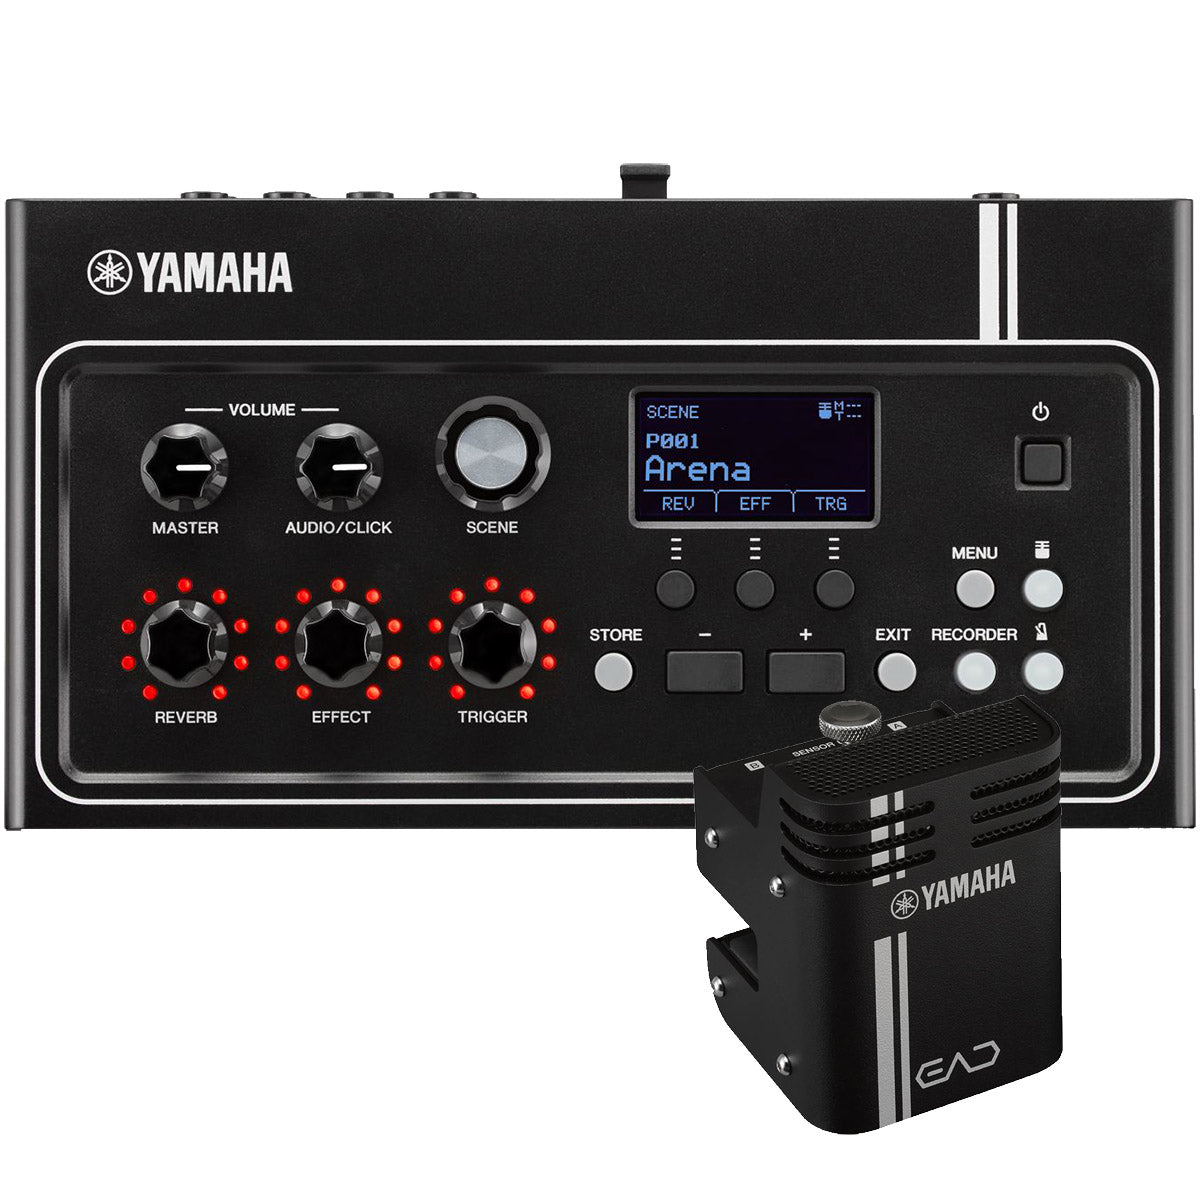 Collage image of Yamaha EAD10 module and sensor